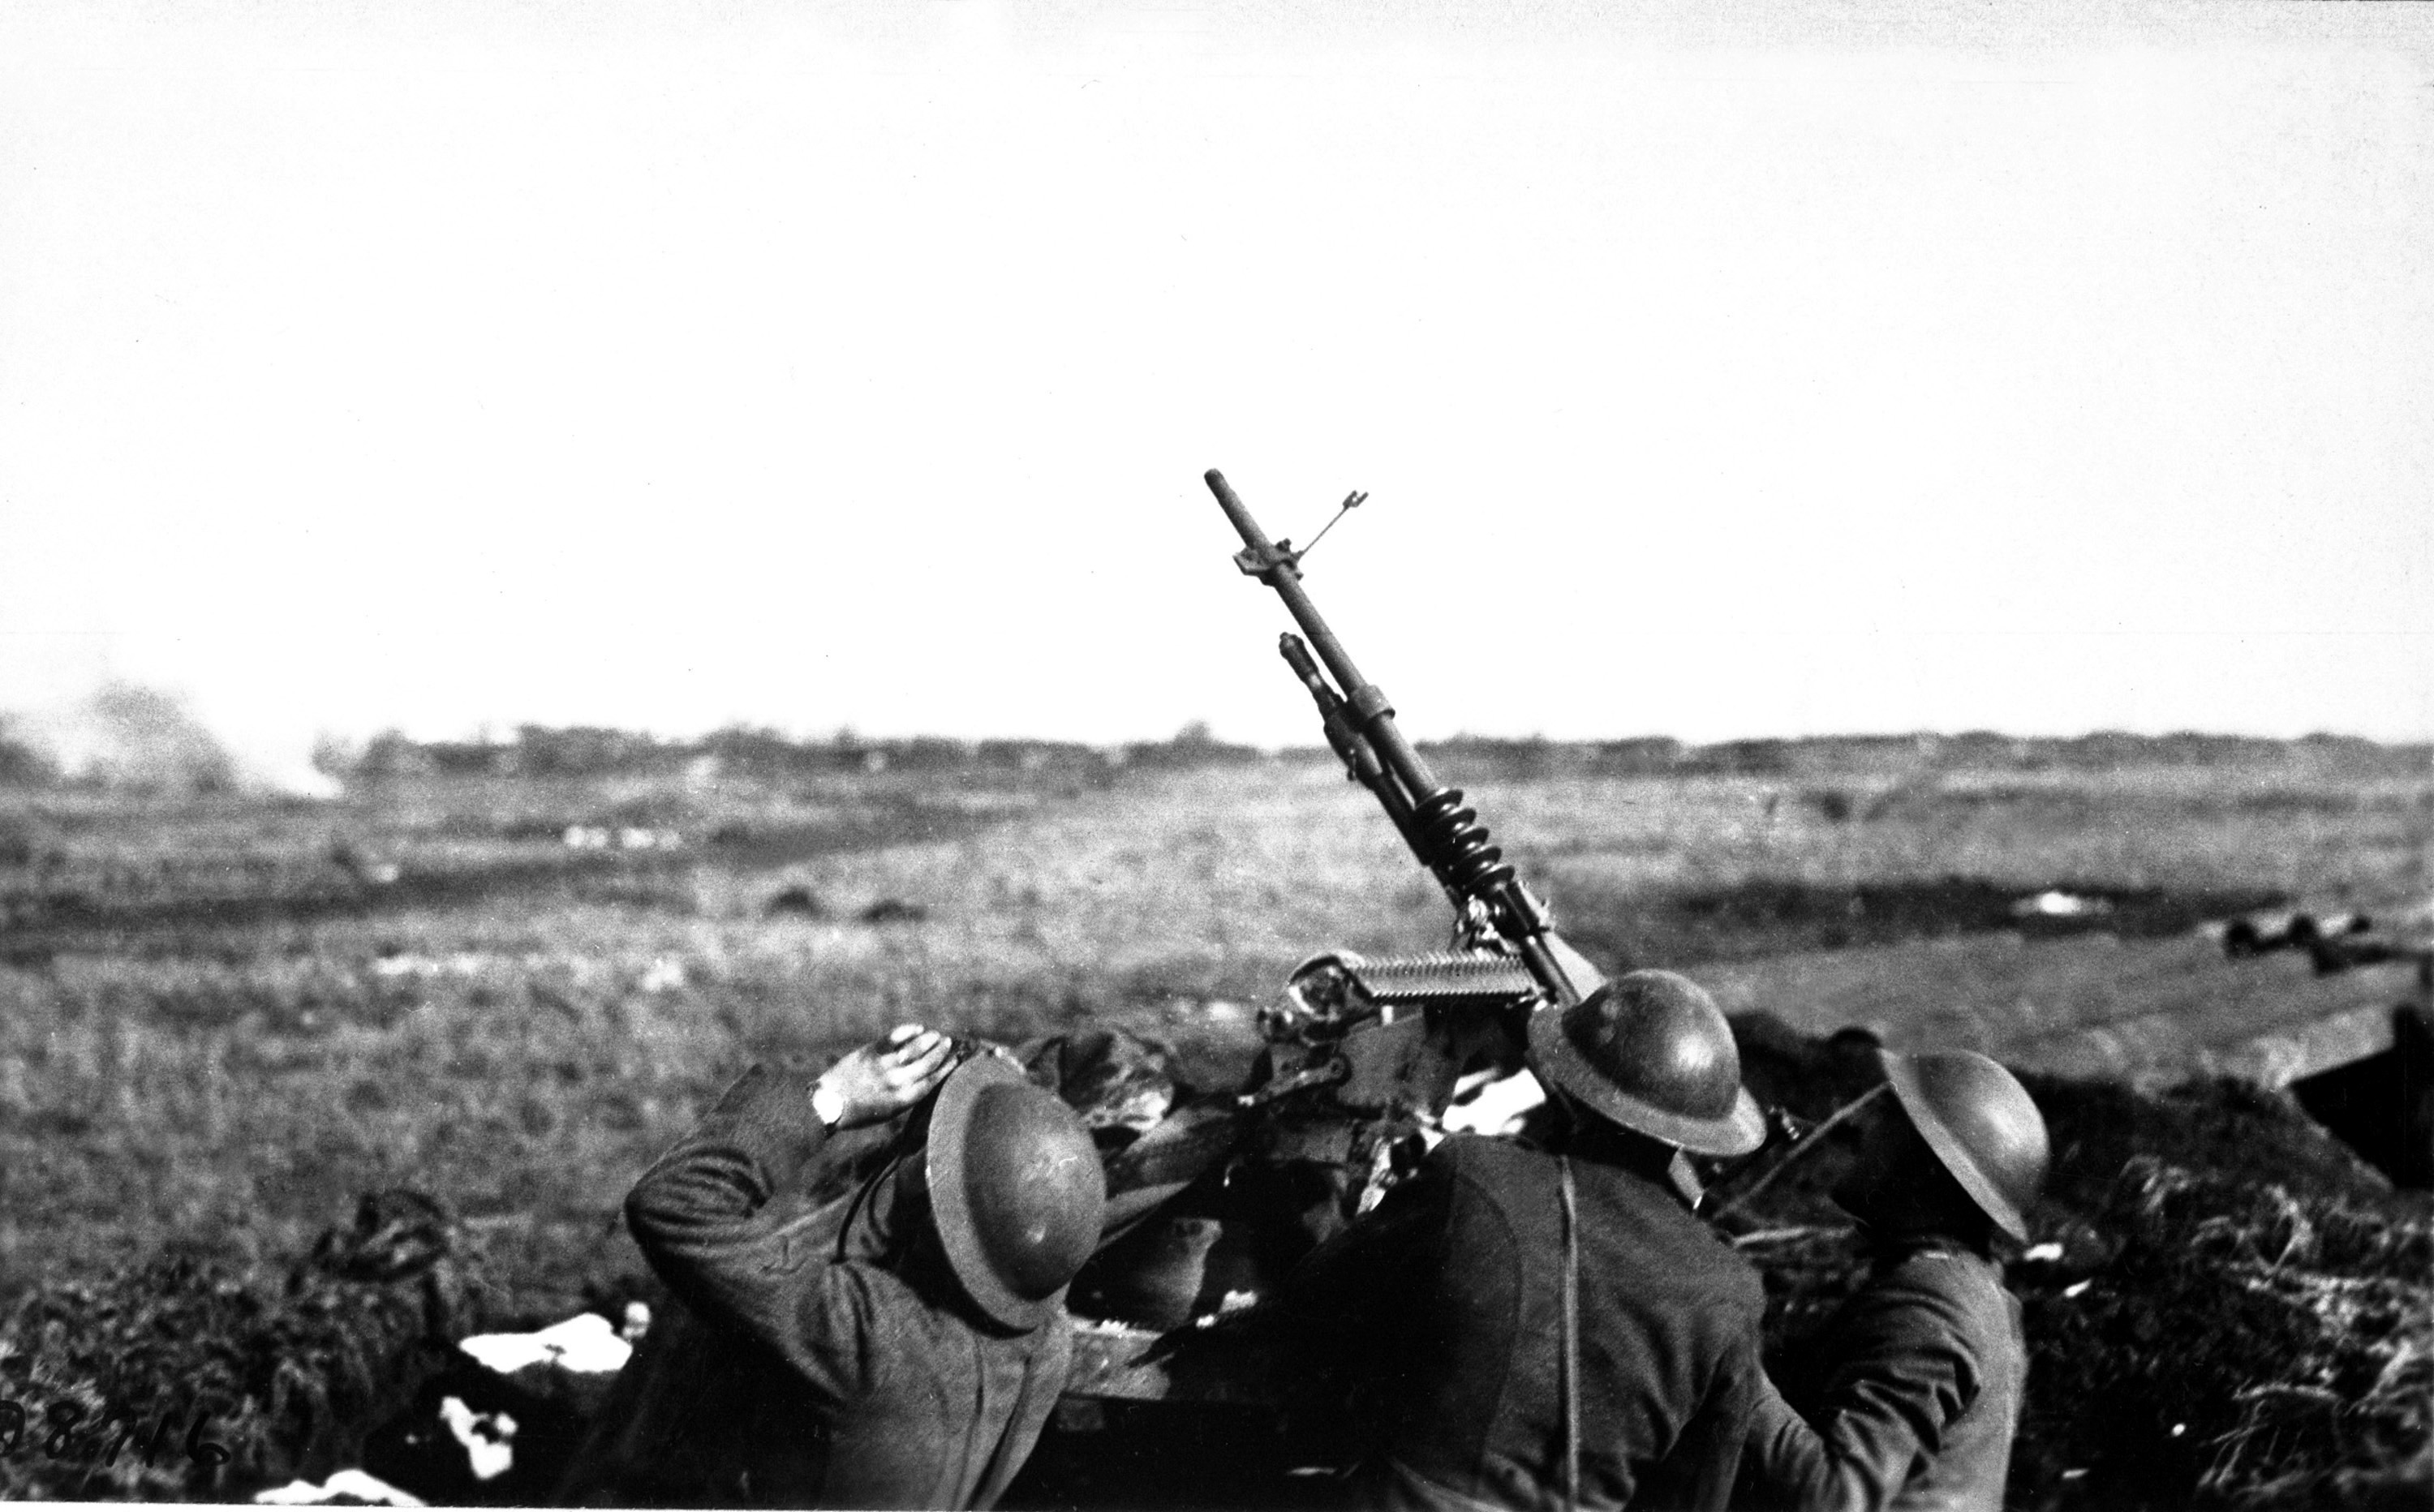 Anti-aircraft gunners operating machine guns during battle.